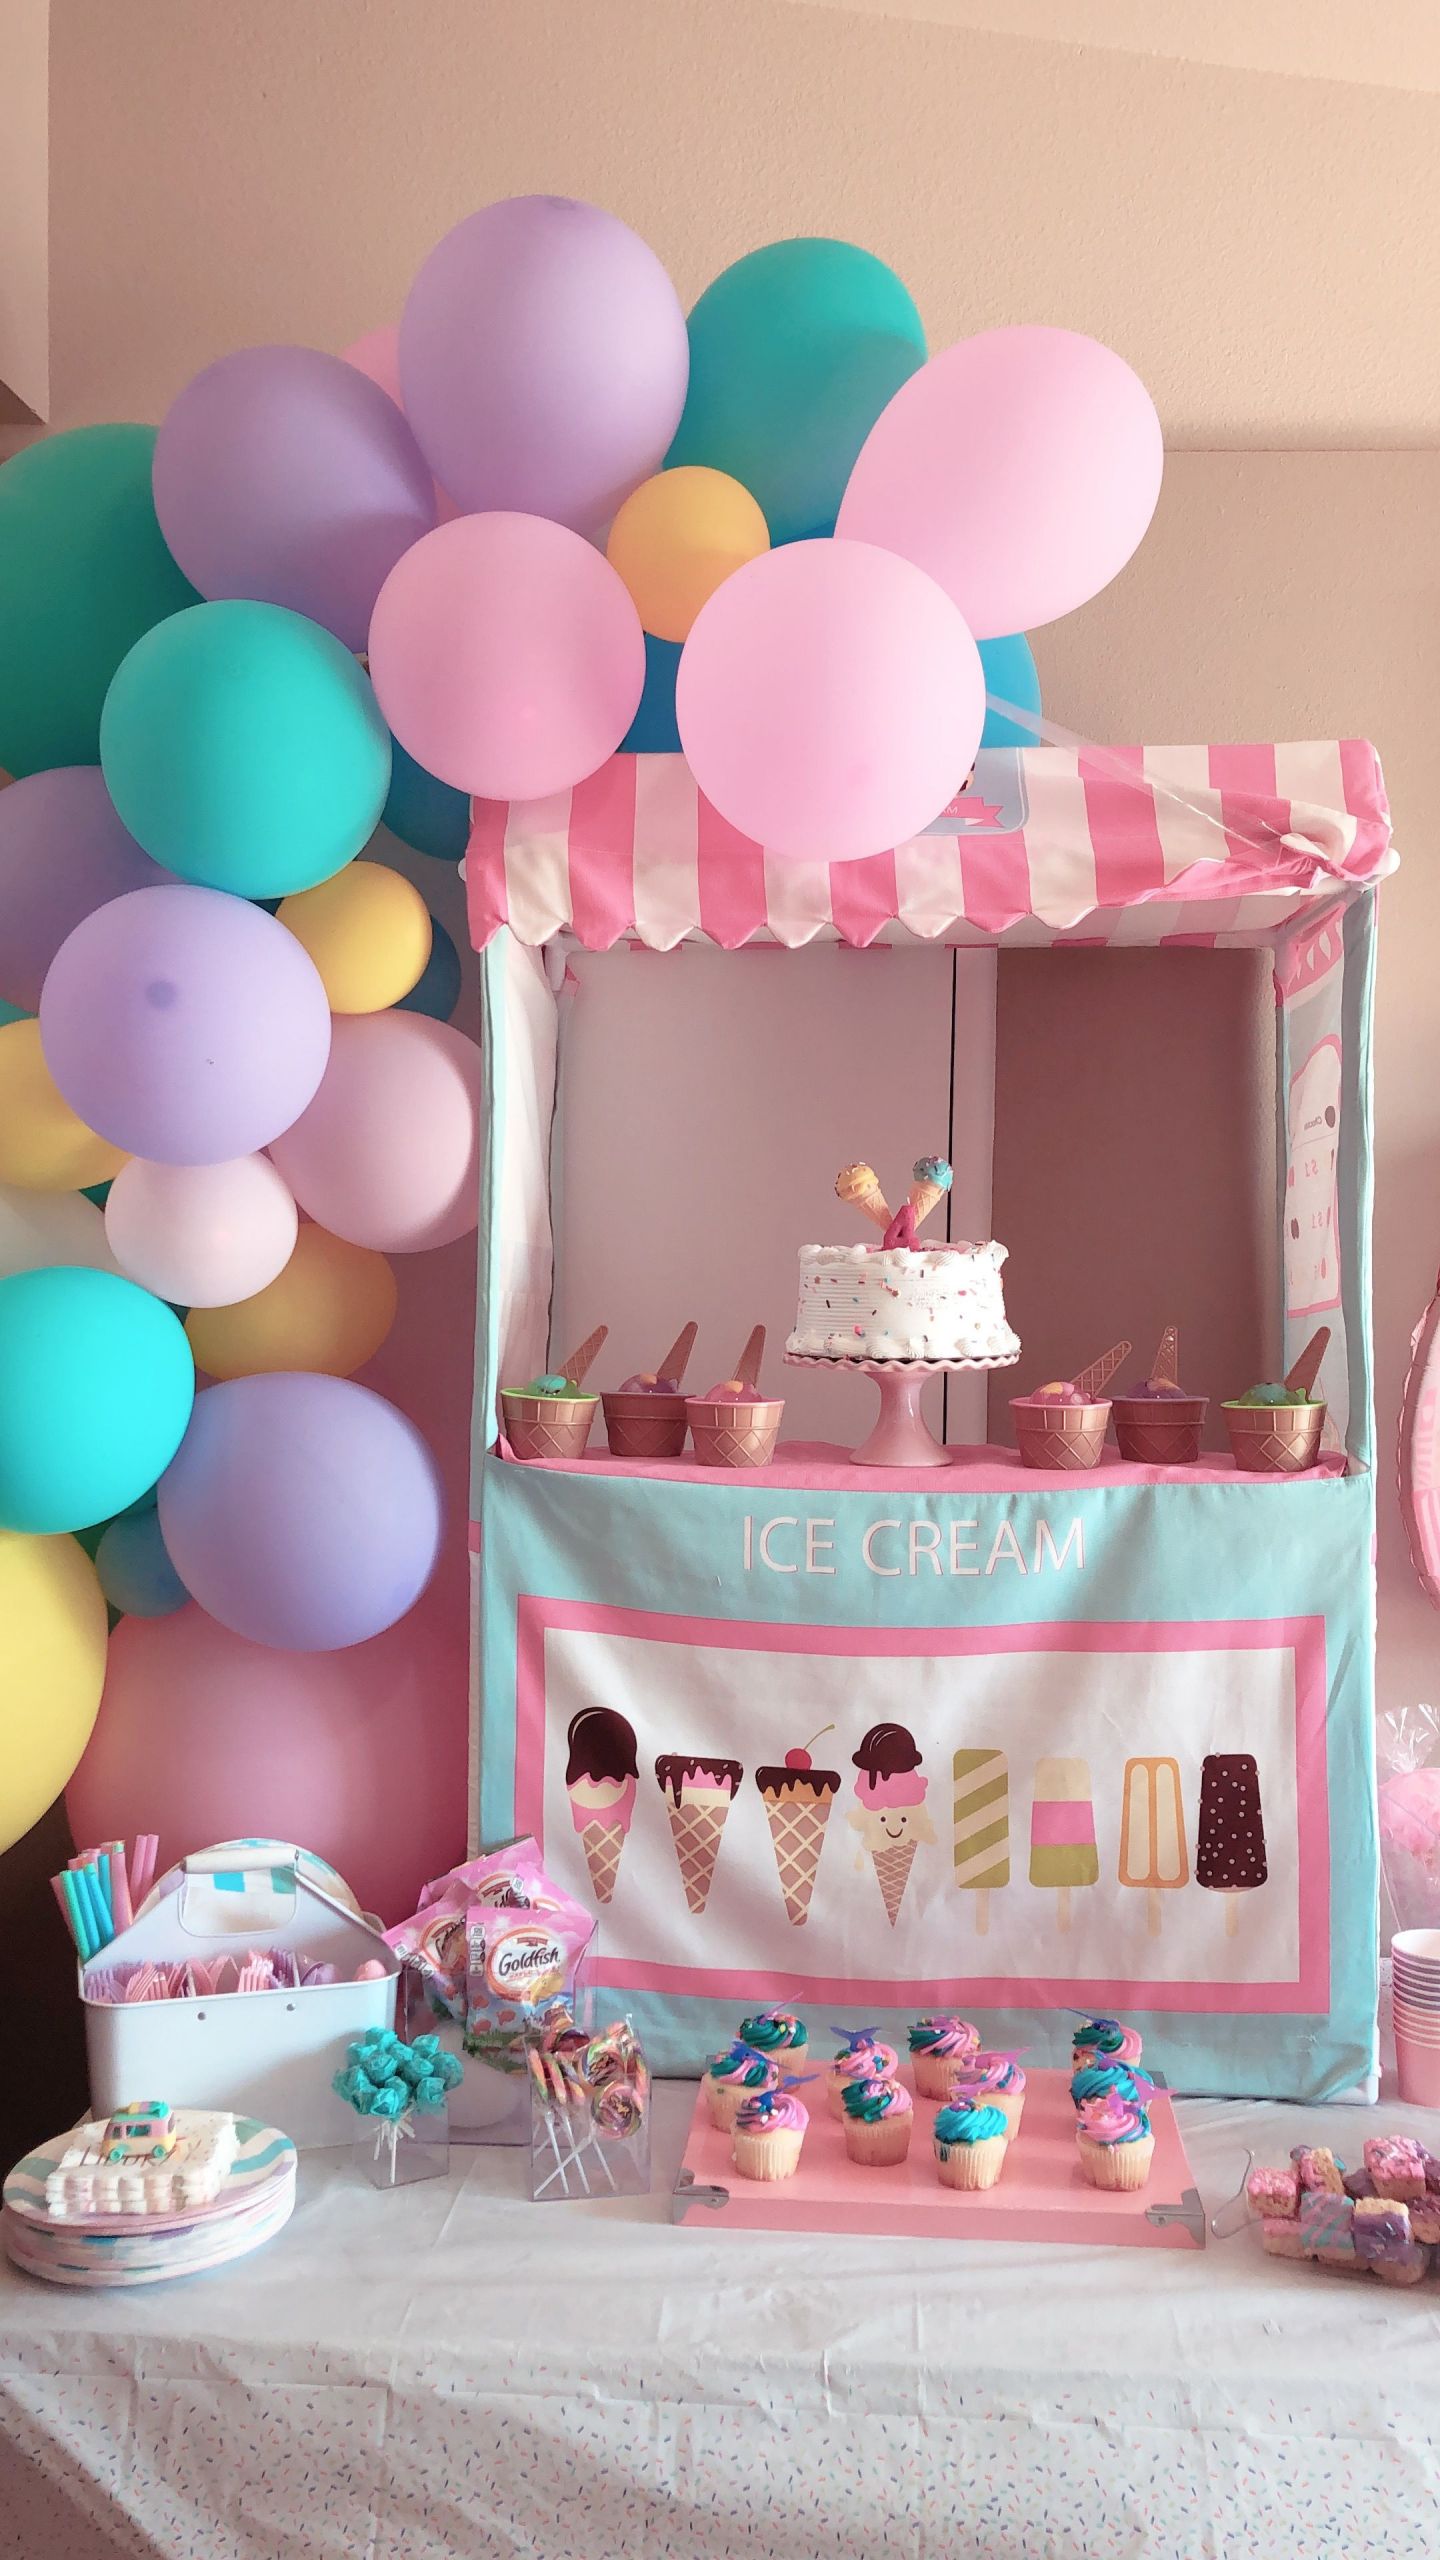 Four Year Old Birthday Party Ideas
 Ice cream birthday party for my 4 year old in 2019